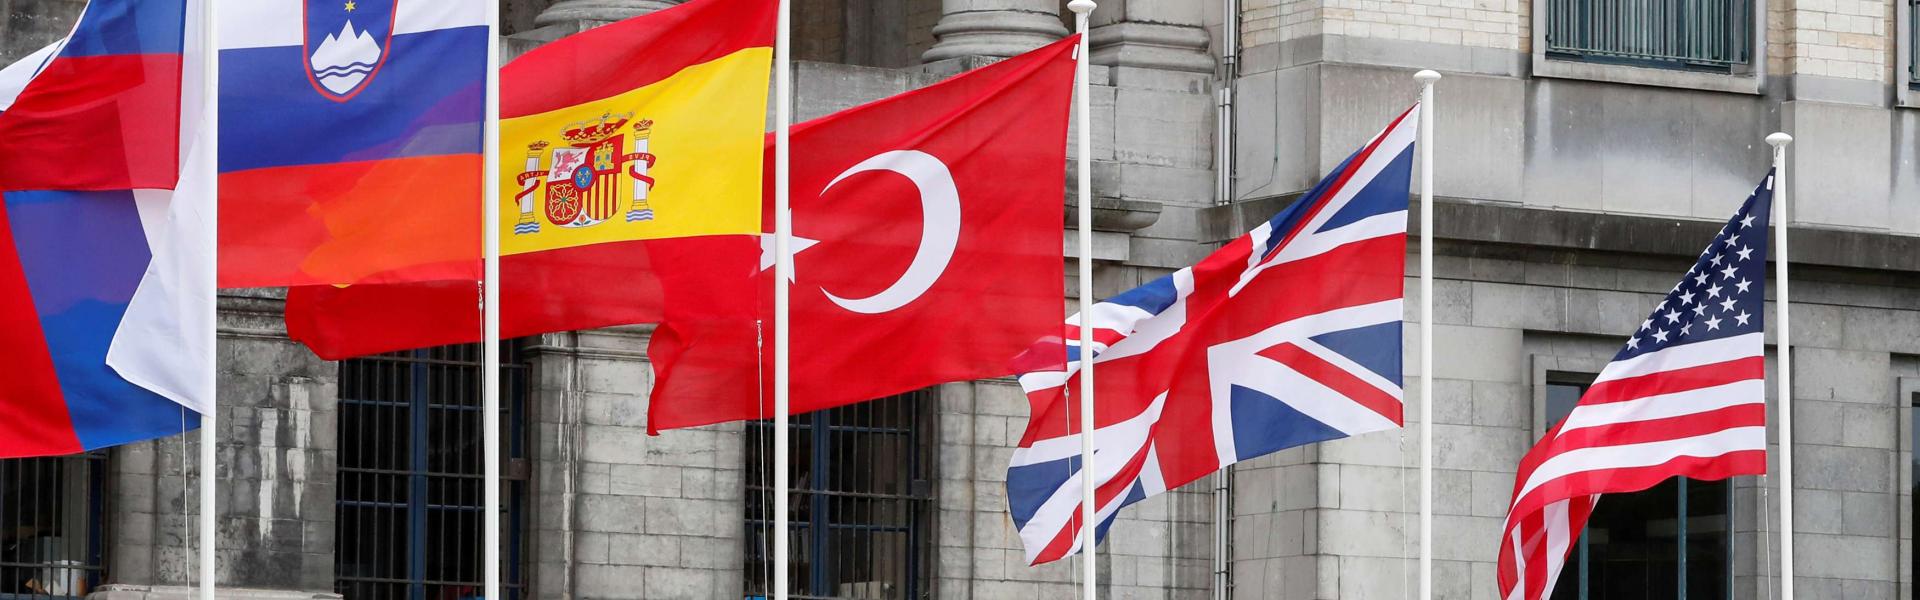 Turkey delays North Macedonia's NATO accession until Skopje delivers alleged Gülenists 2